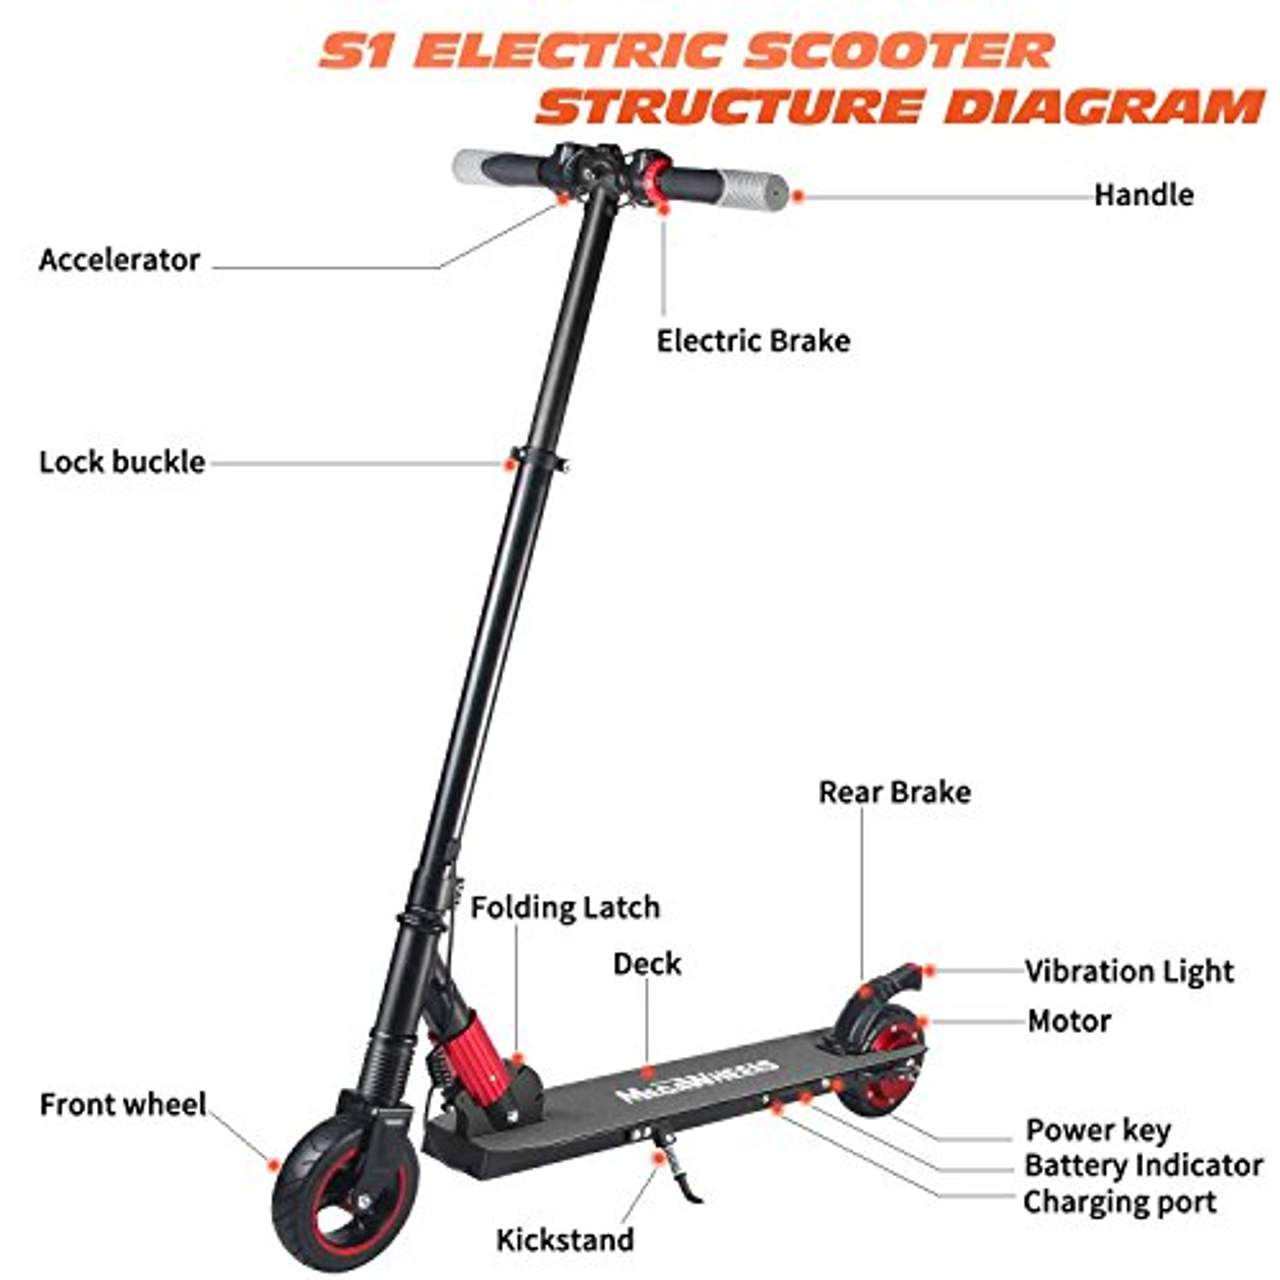 M MEGAWHEELS Elektro Scooter